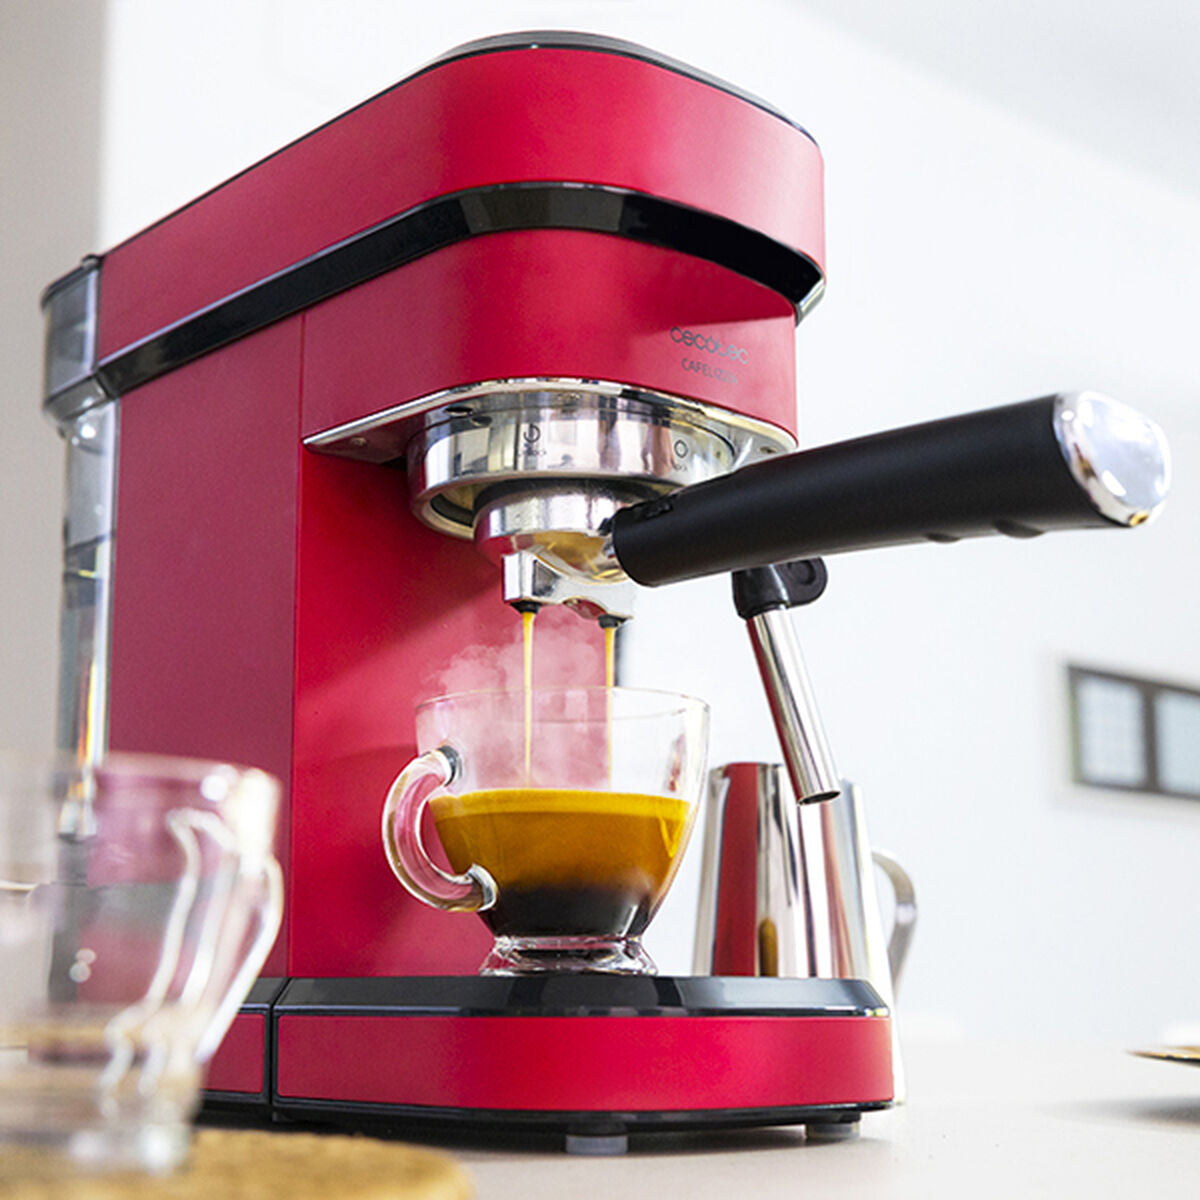 Express Manual Coffee Machine Cecotec Cafelizzia 790 Shiny 1,2 L 20